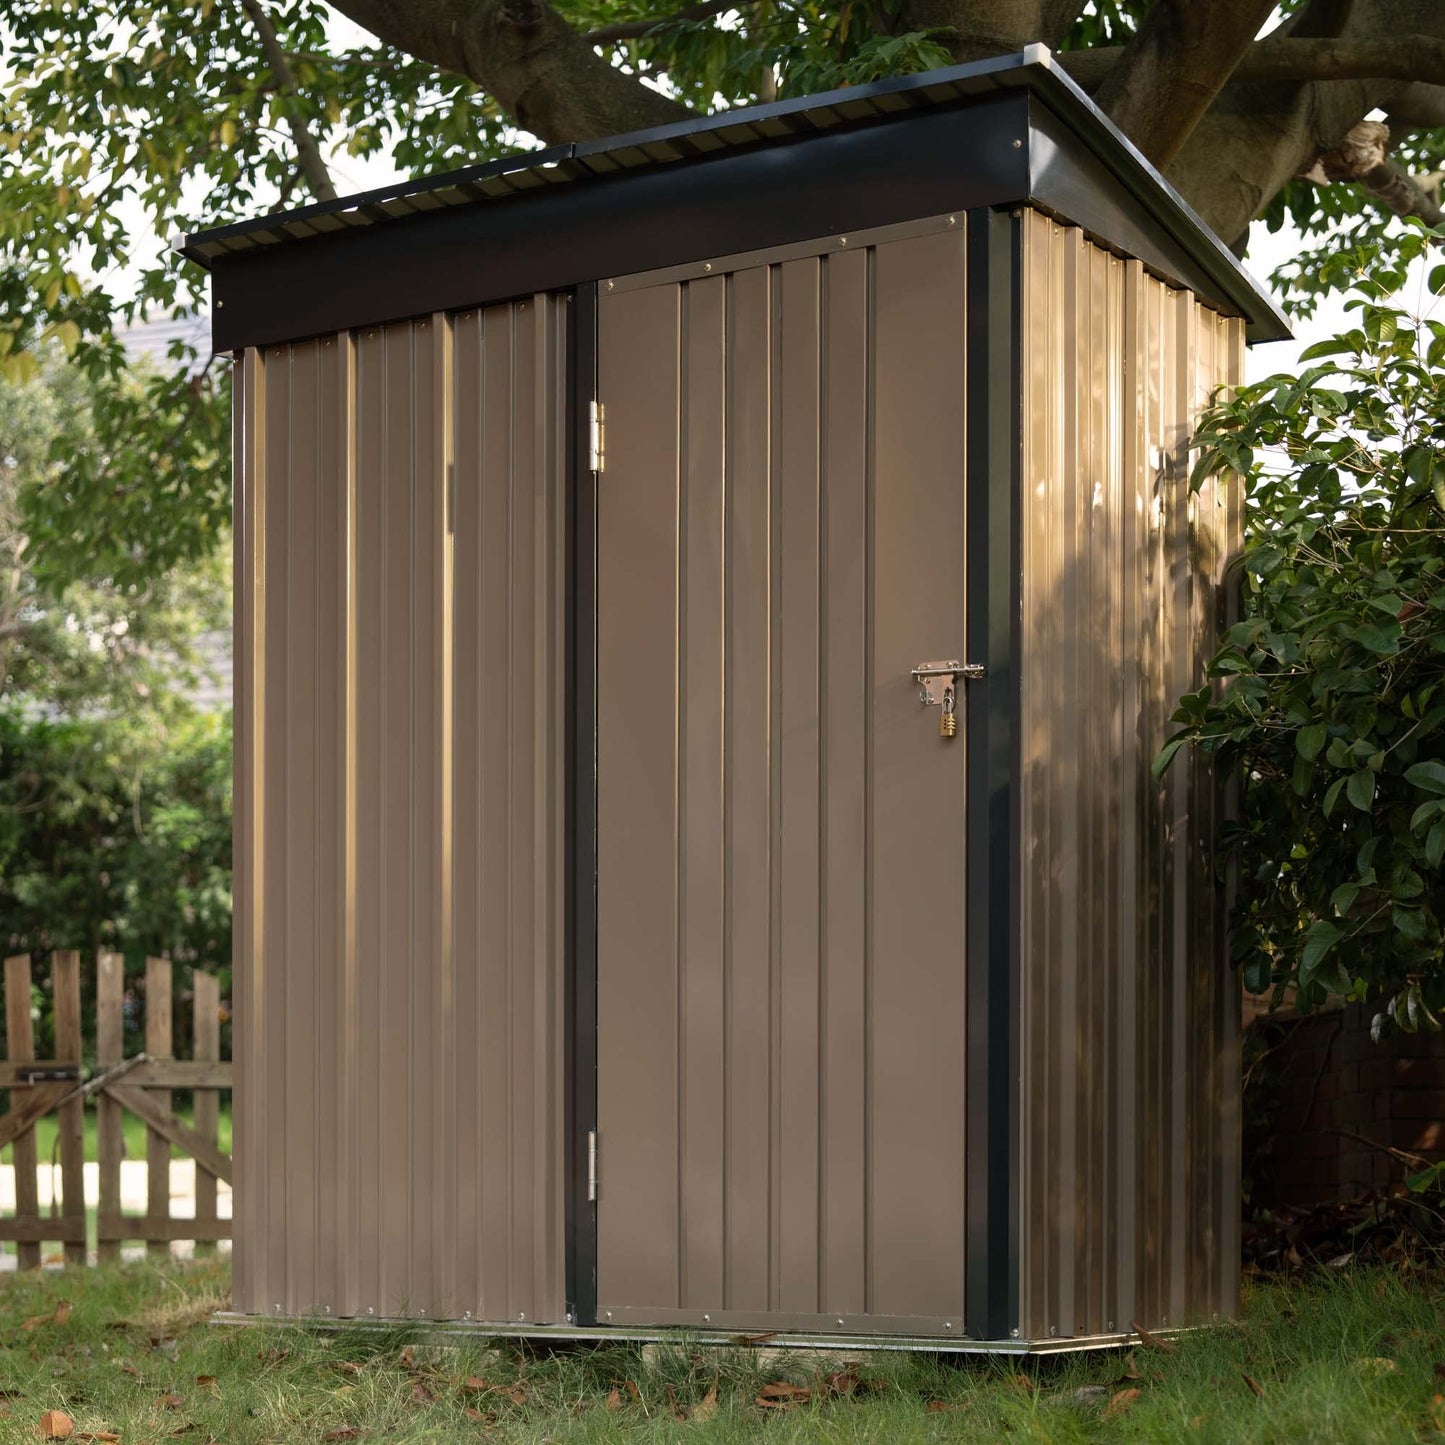 Devoko Outdoor Storage Shed 5 x 3 FT Lockable Metal Garden Shed Steel Anti-Corrosion Storage House with Single Lockable Door for Backyard Outdoor Patio (Brown)